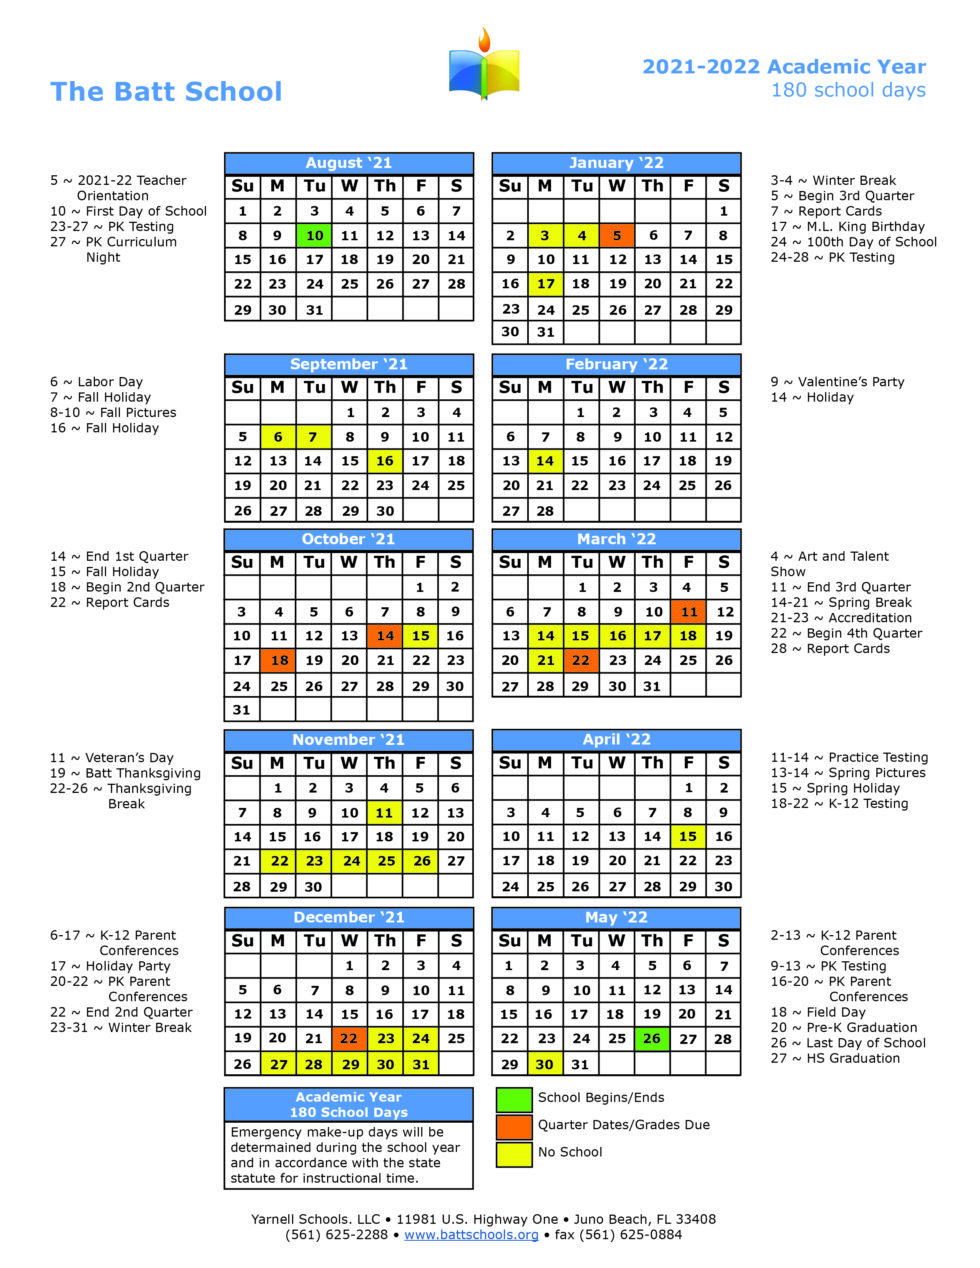 School Calendar The Batt School